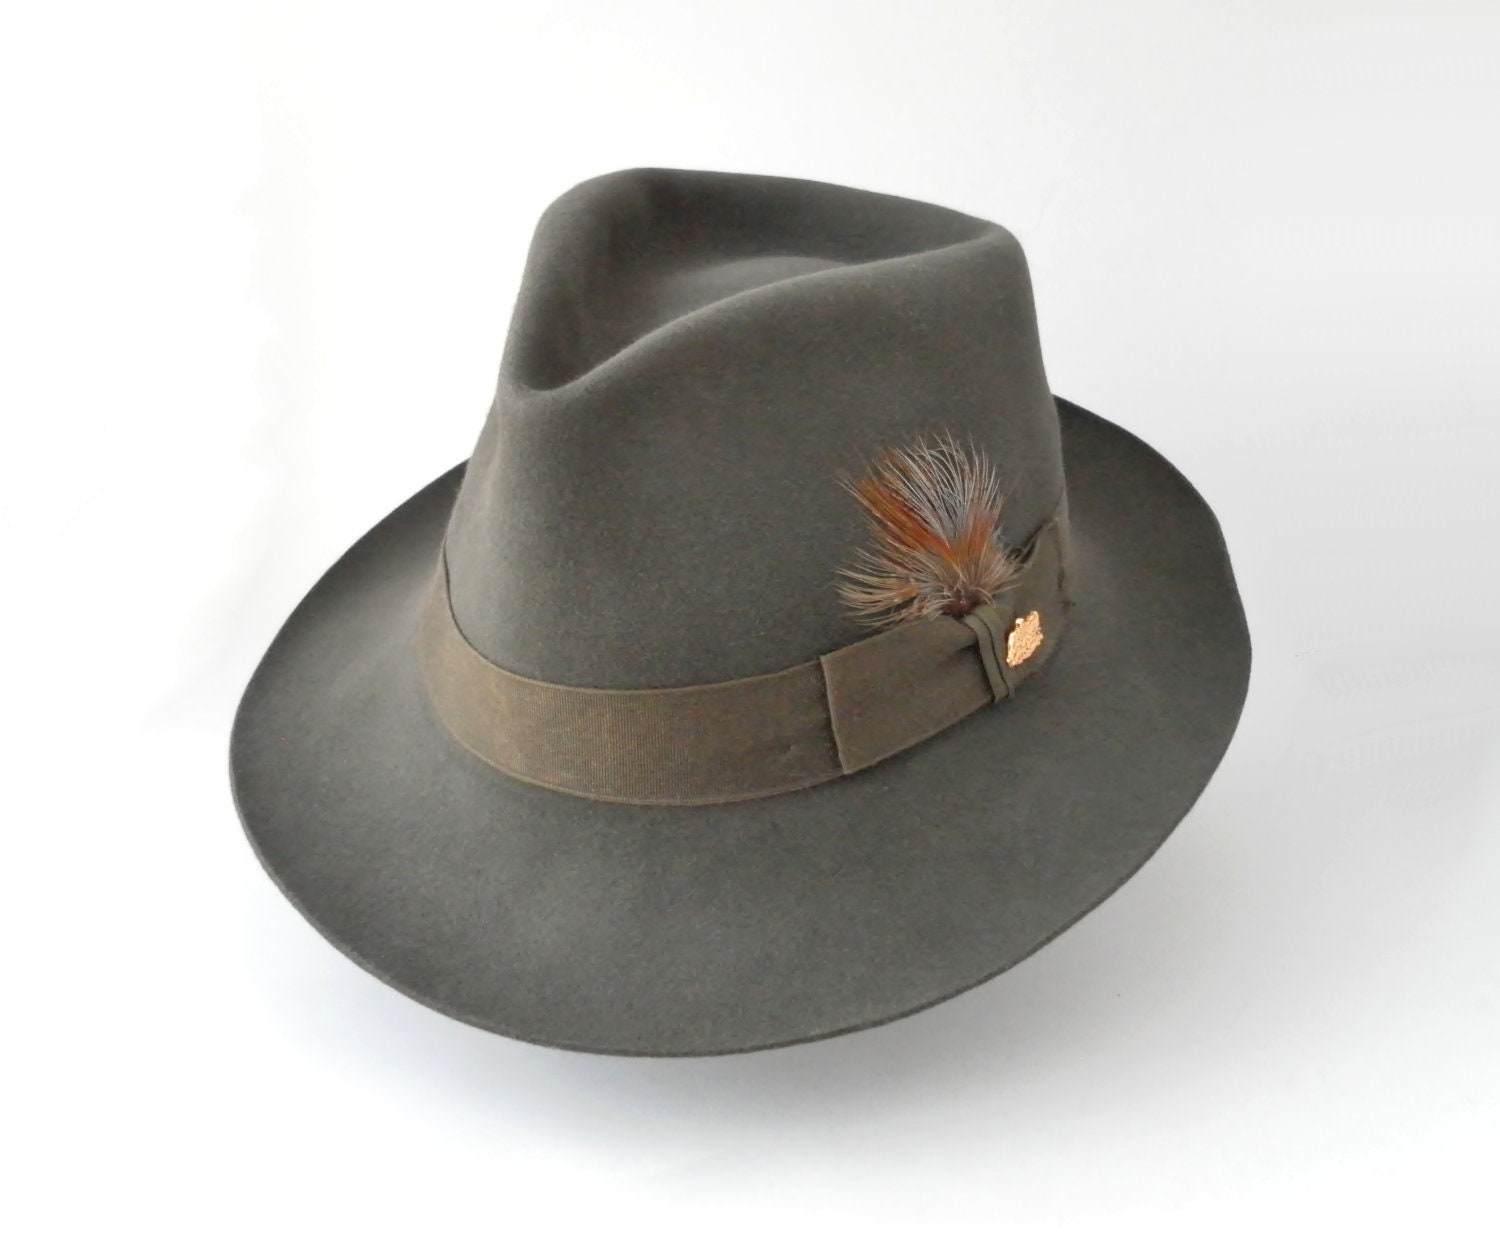 Vintage Stetson Fedora Hat "The Sovereign" Chatham Unisex